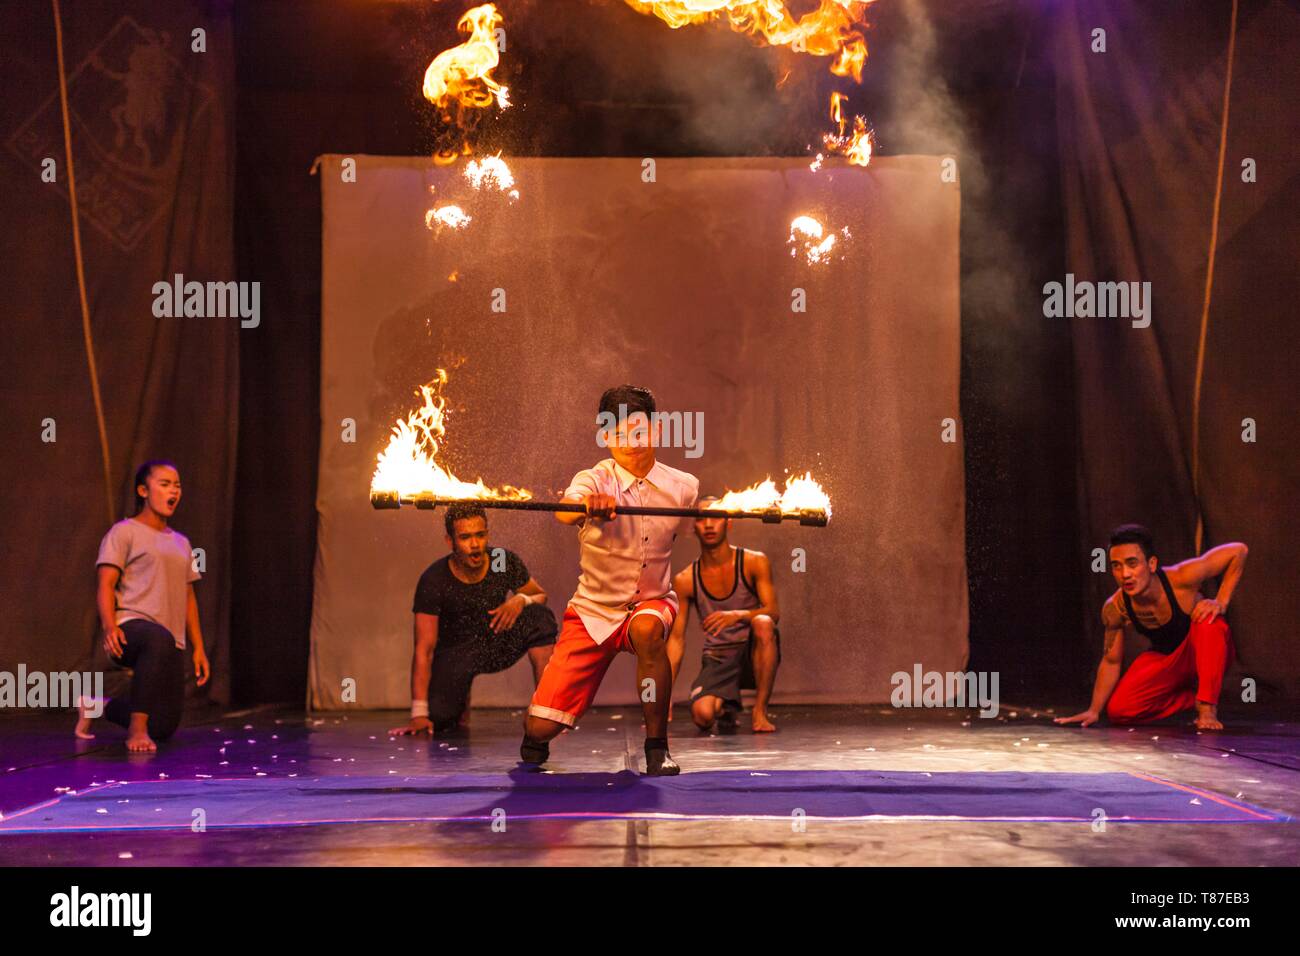 Cambodia, Battambang, Phar Ponleu Selpak, arts and circus school, juggler with flaming torch during circus performance Stock Photo